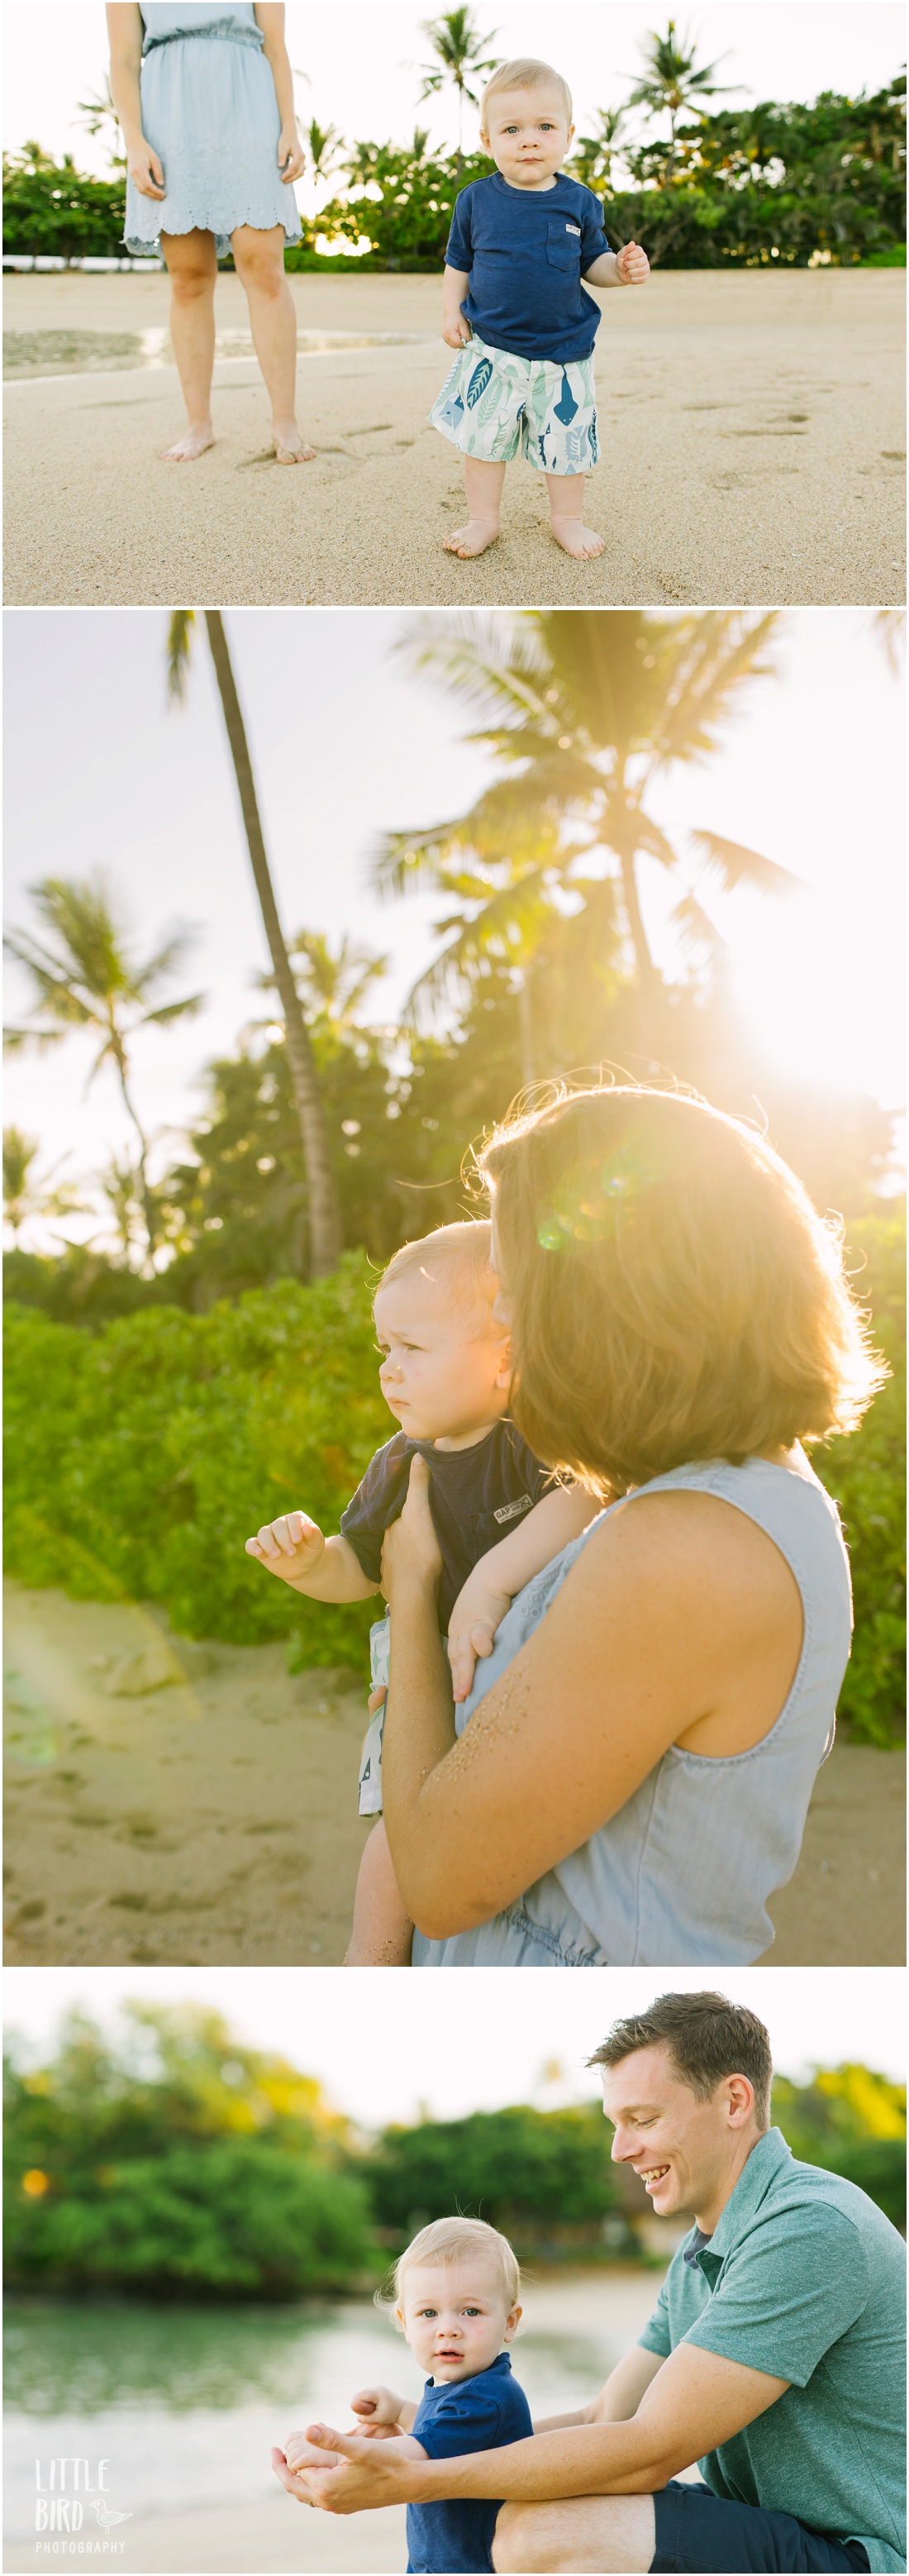 baby exploring hawaii beaches on vacation